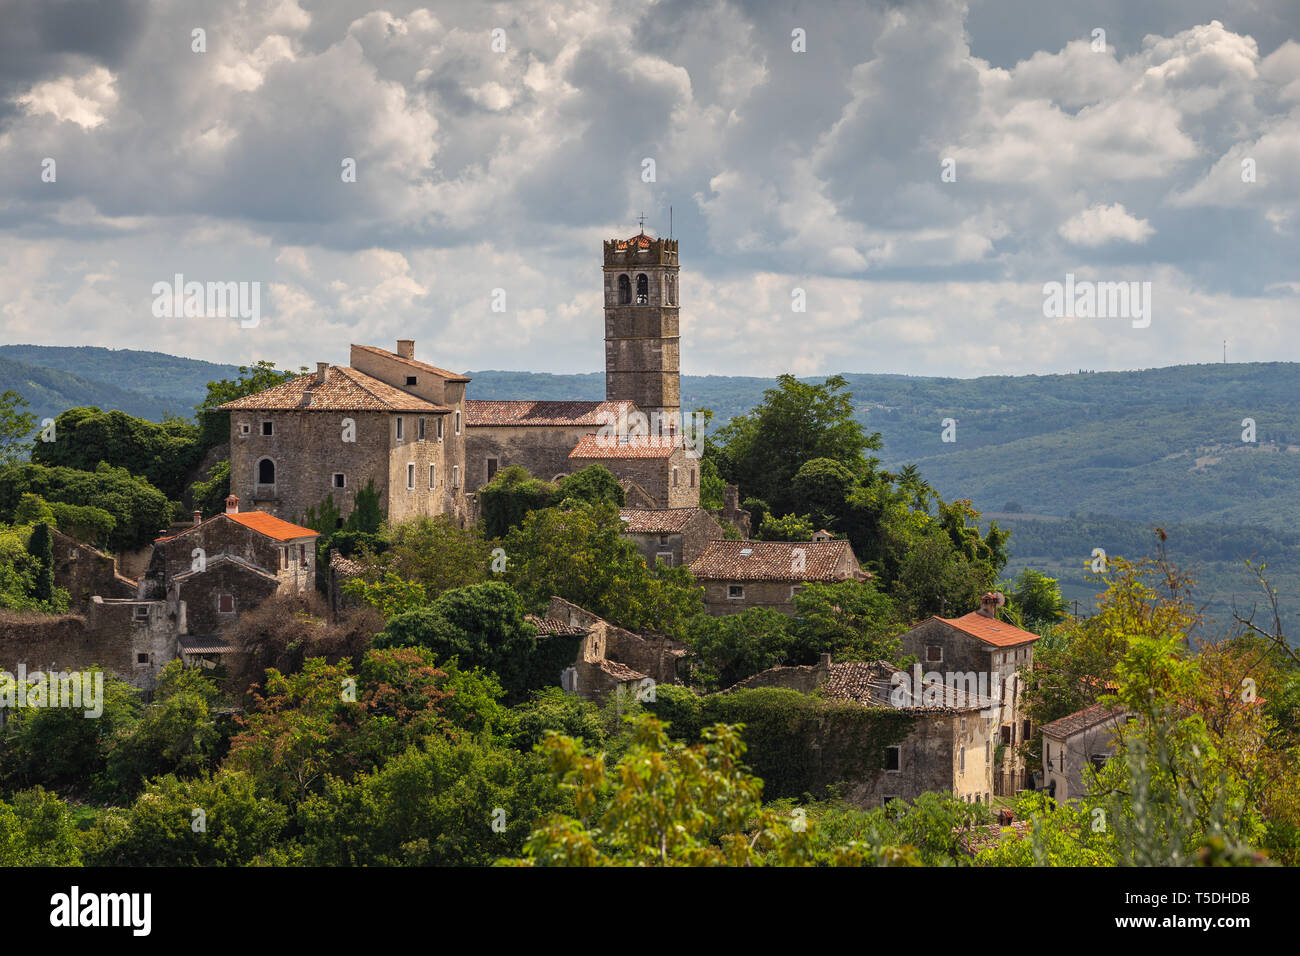 Završje. Piemonte d'Istrie. Vieux village sur colline. Istrie. Croatie. Europe. Banque D'Images